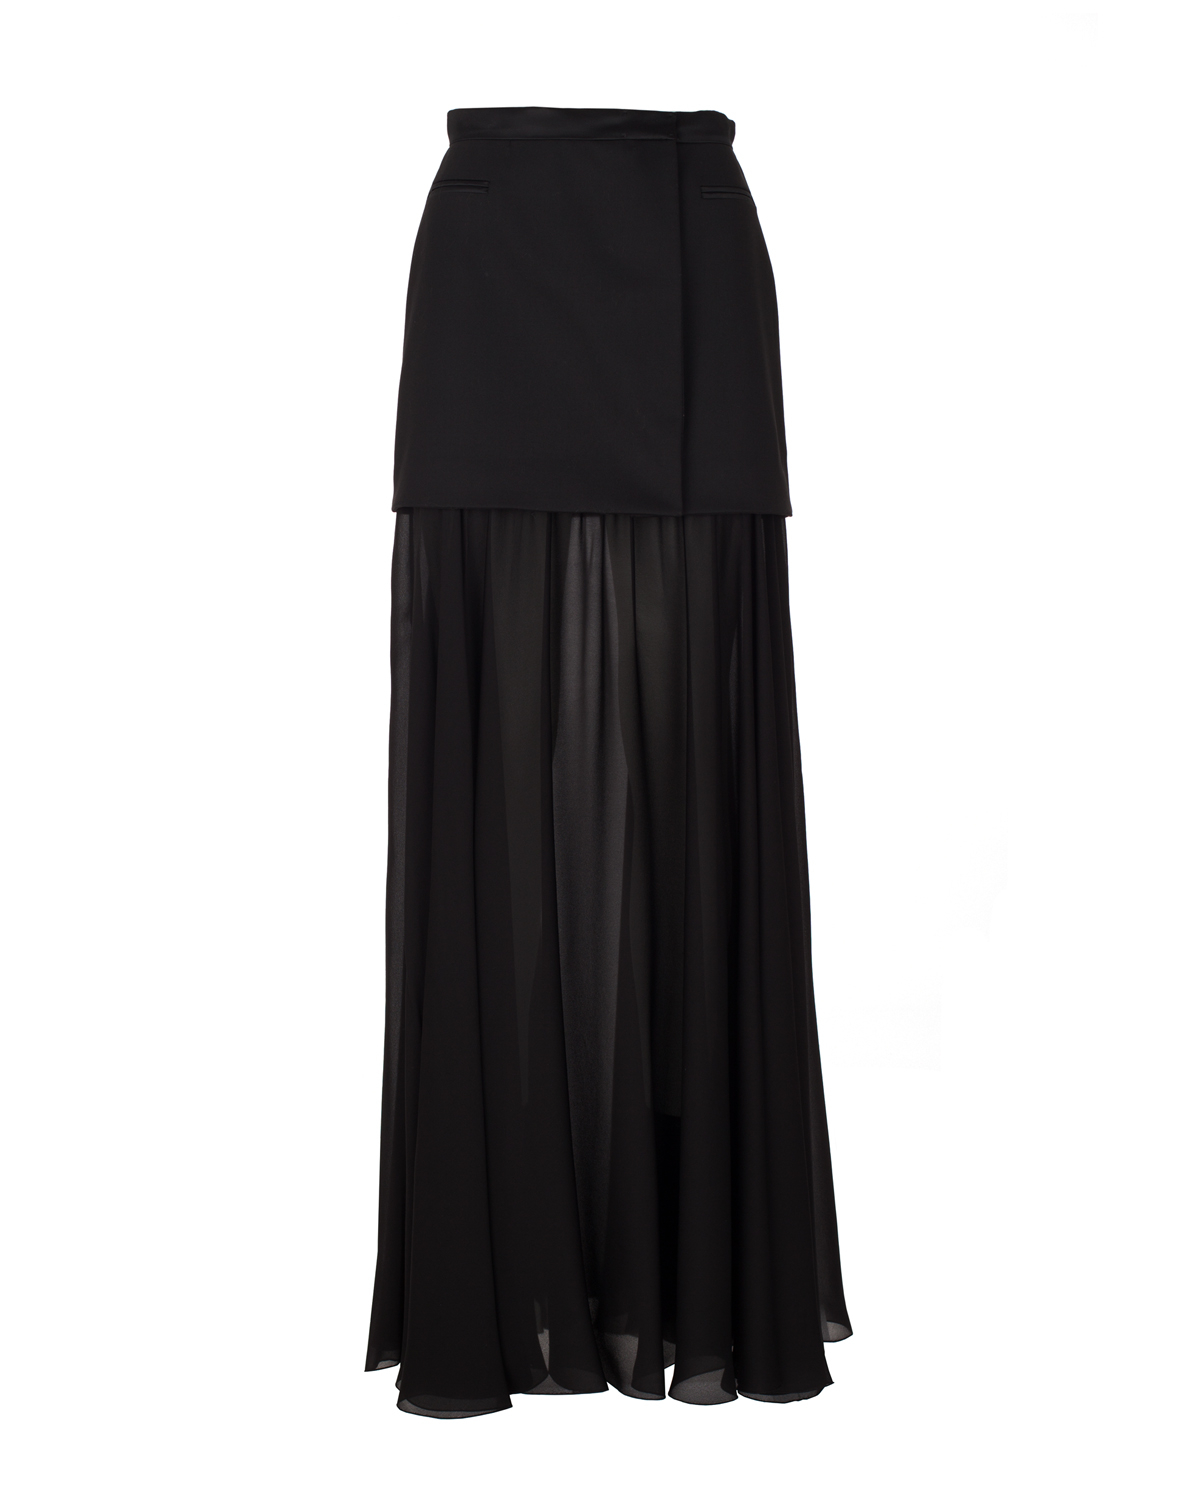 Long black skirt | Temporary Flash Sale | Genny